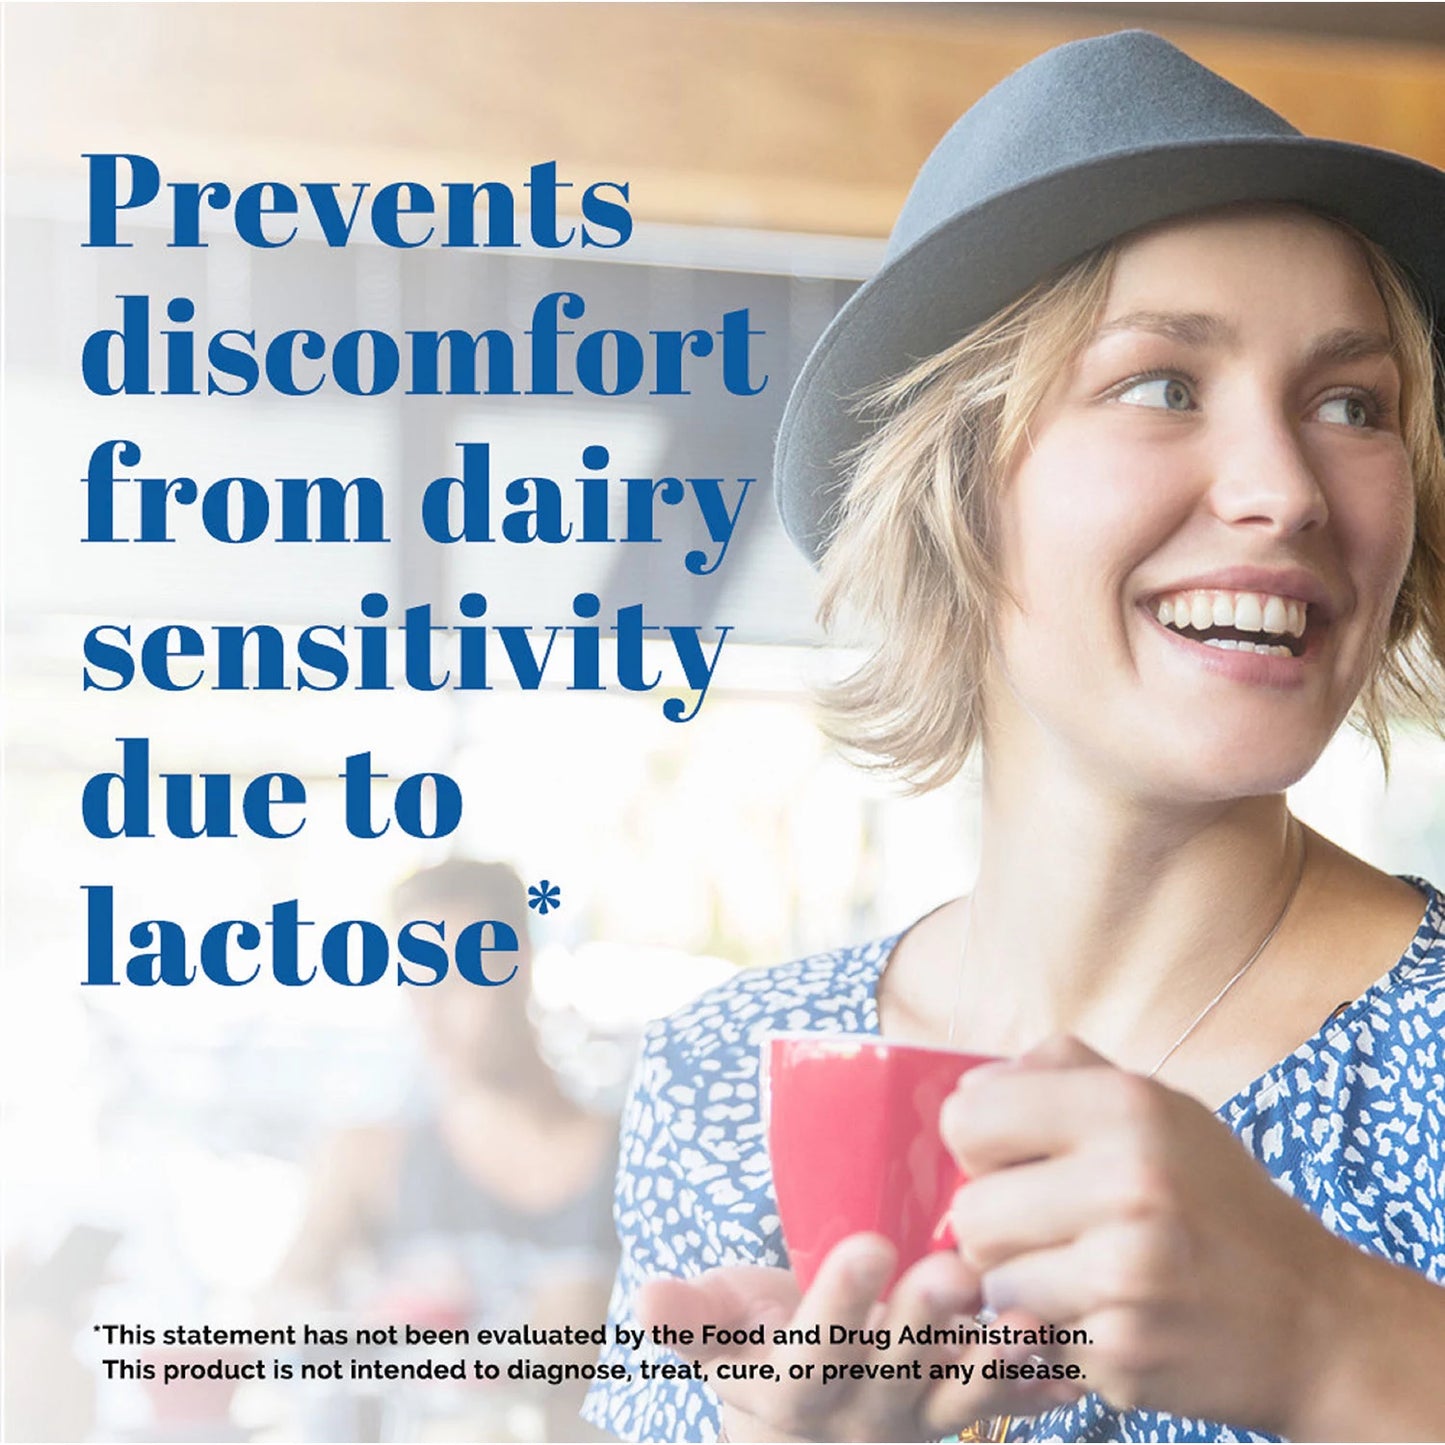 Lactaid Fast Act Lactose Intolerance Caplets (120 ct.)